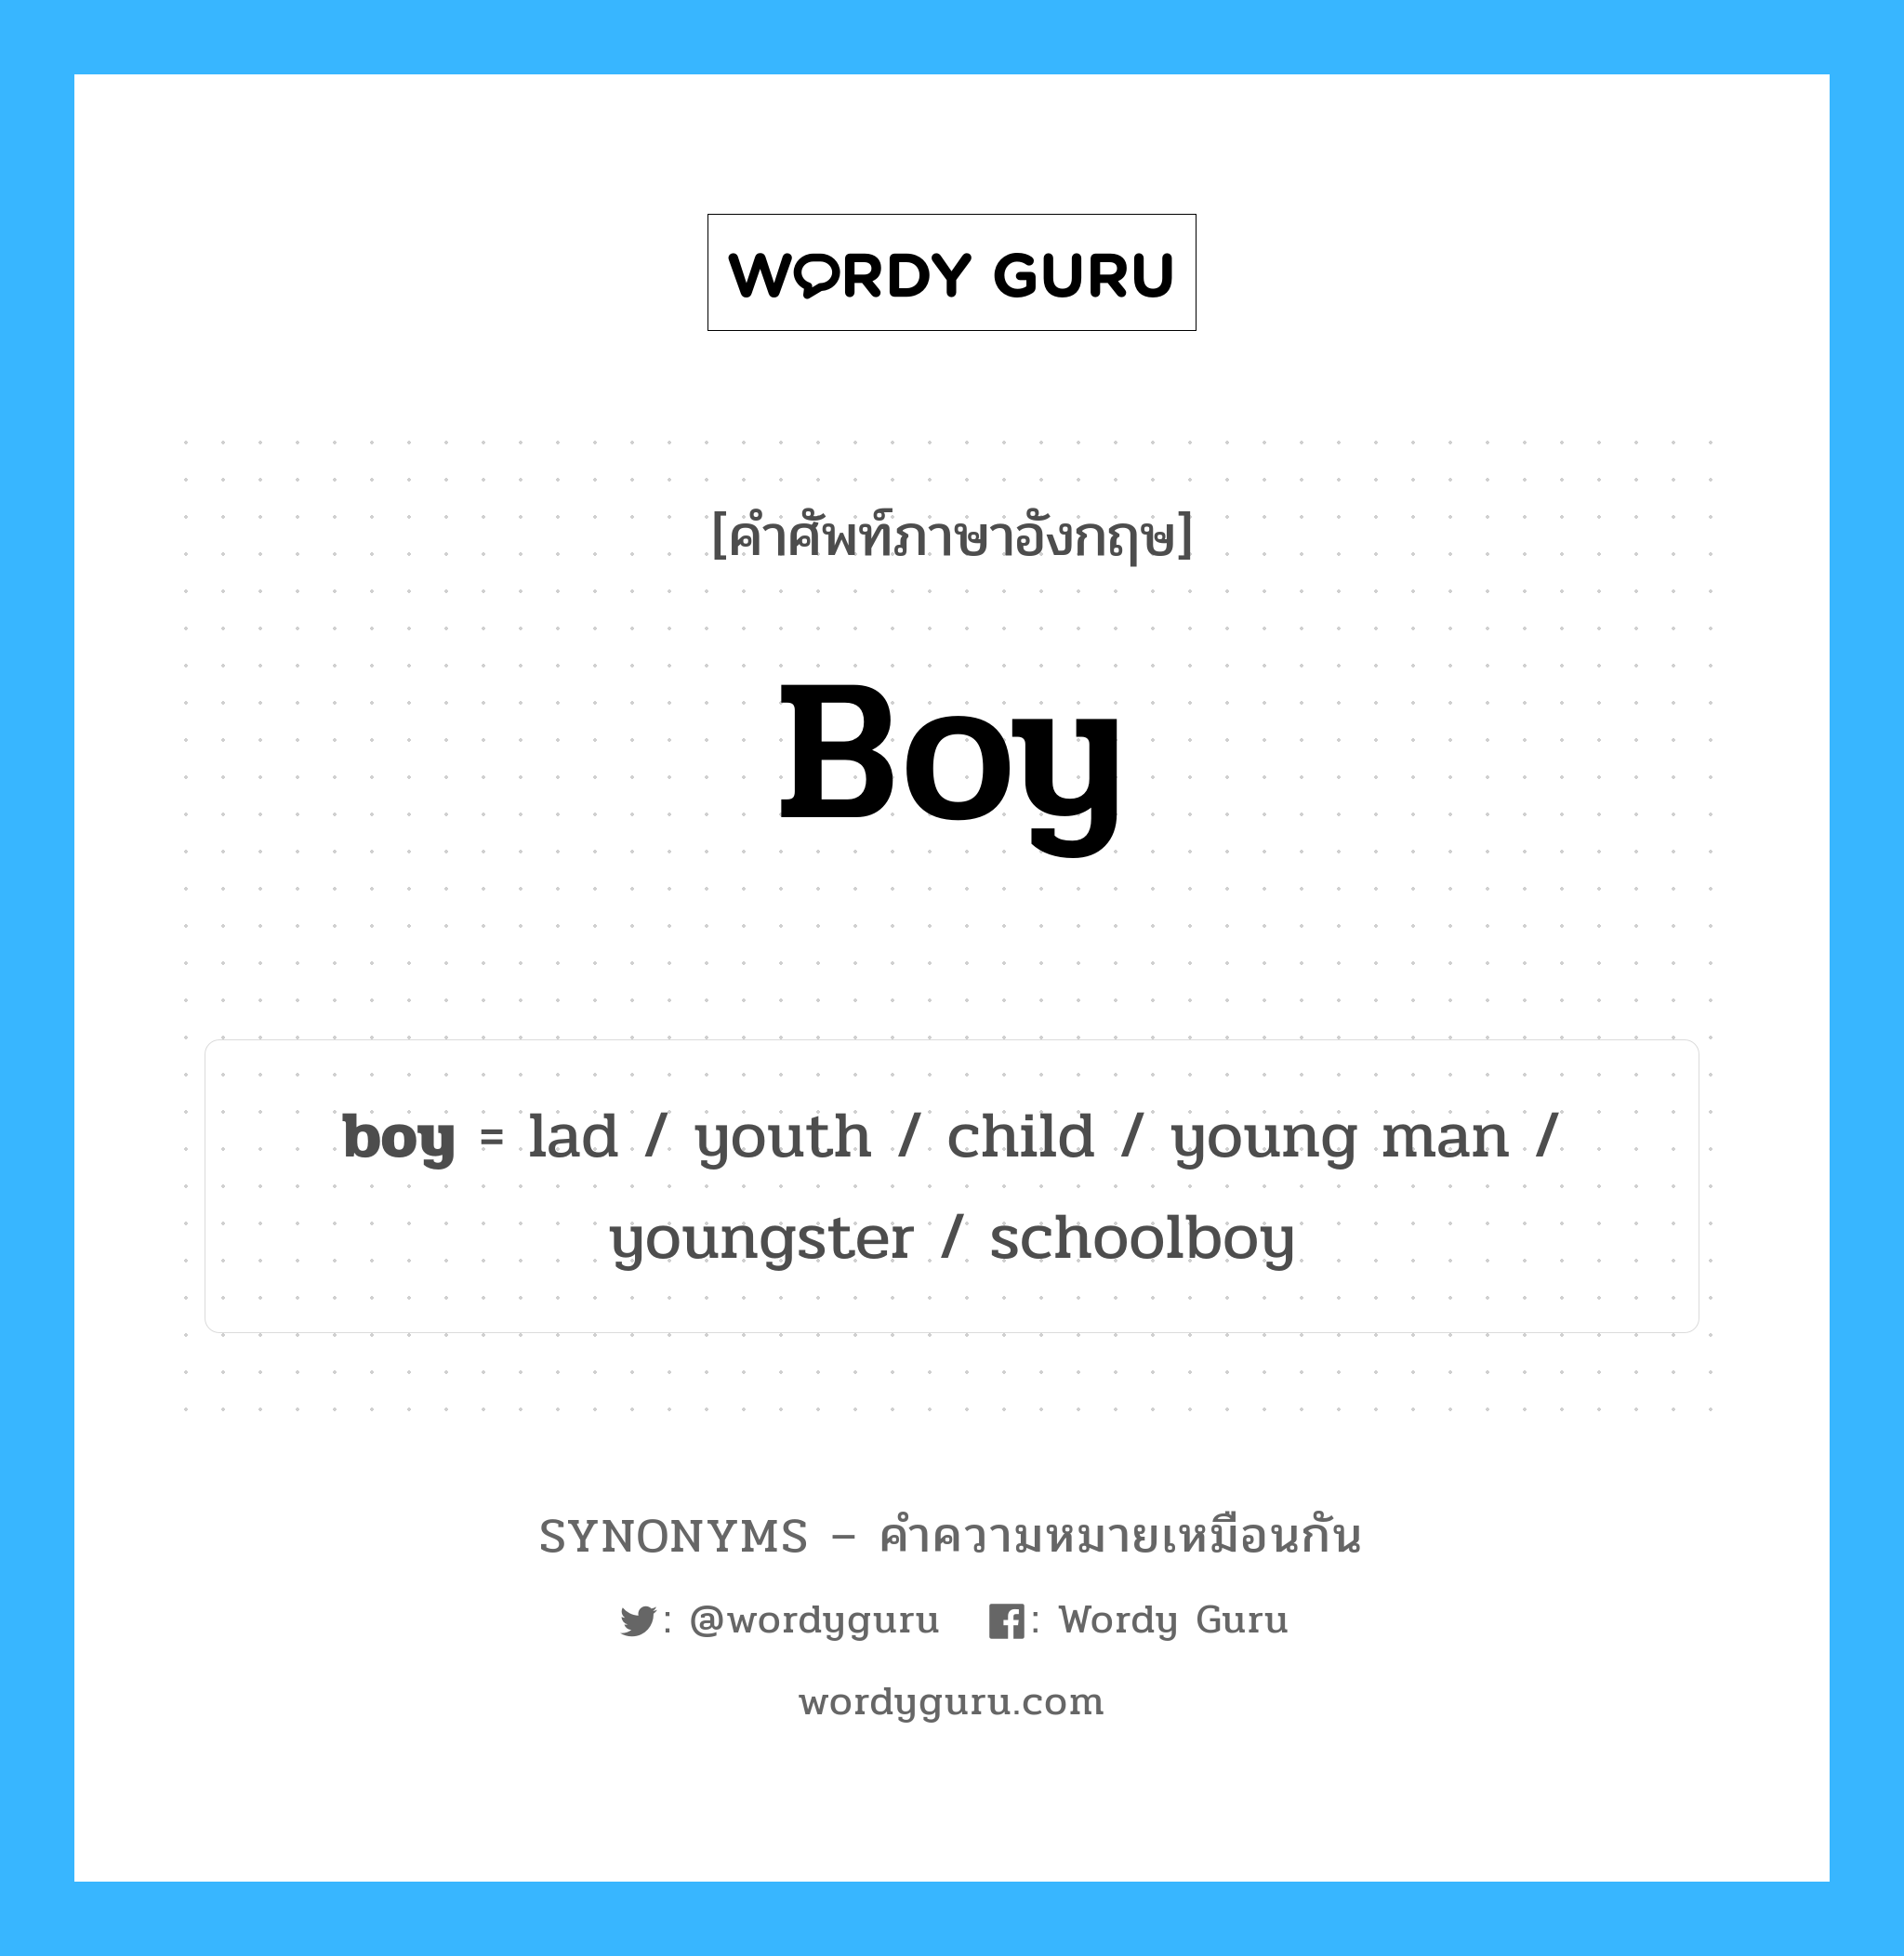 youth เป็นหนึ่งใน boy และมีคำอื่น ๆ อีกดังนี้, คำศัพท์ภาษาอังกฤษ youth ความหมายคล้ายกันกับ boy แปลว่า เยาวชน หมวด boy